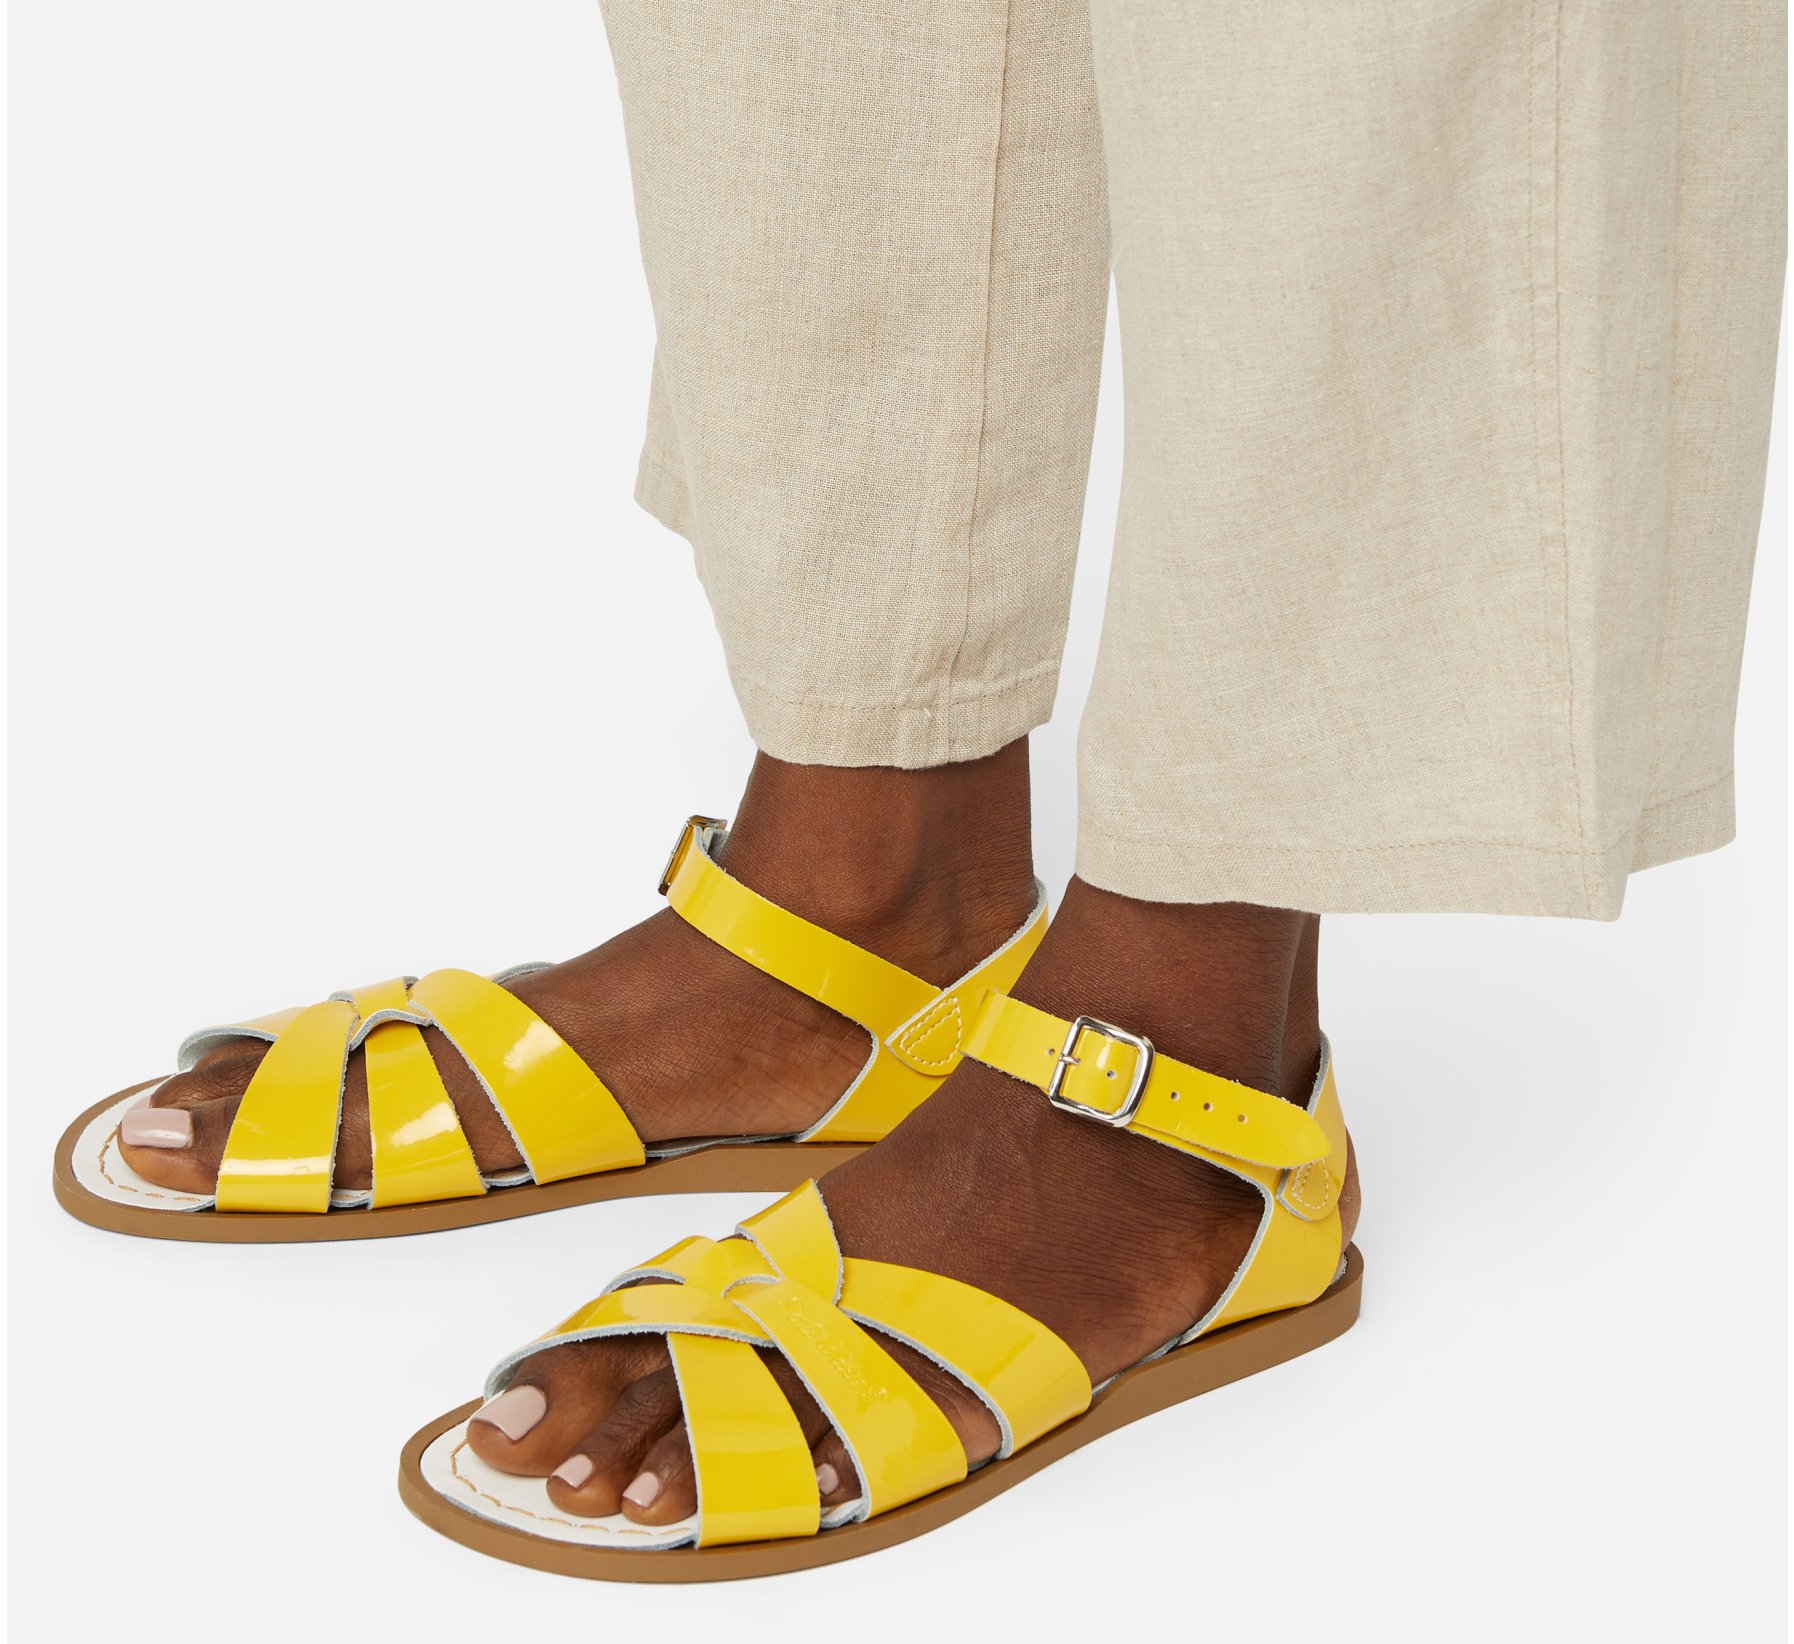 Original Shiny Yellow Sandal - Salt Water Sandals